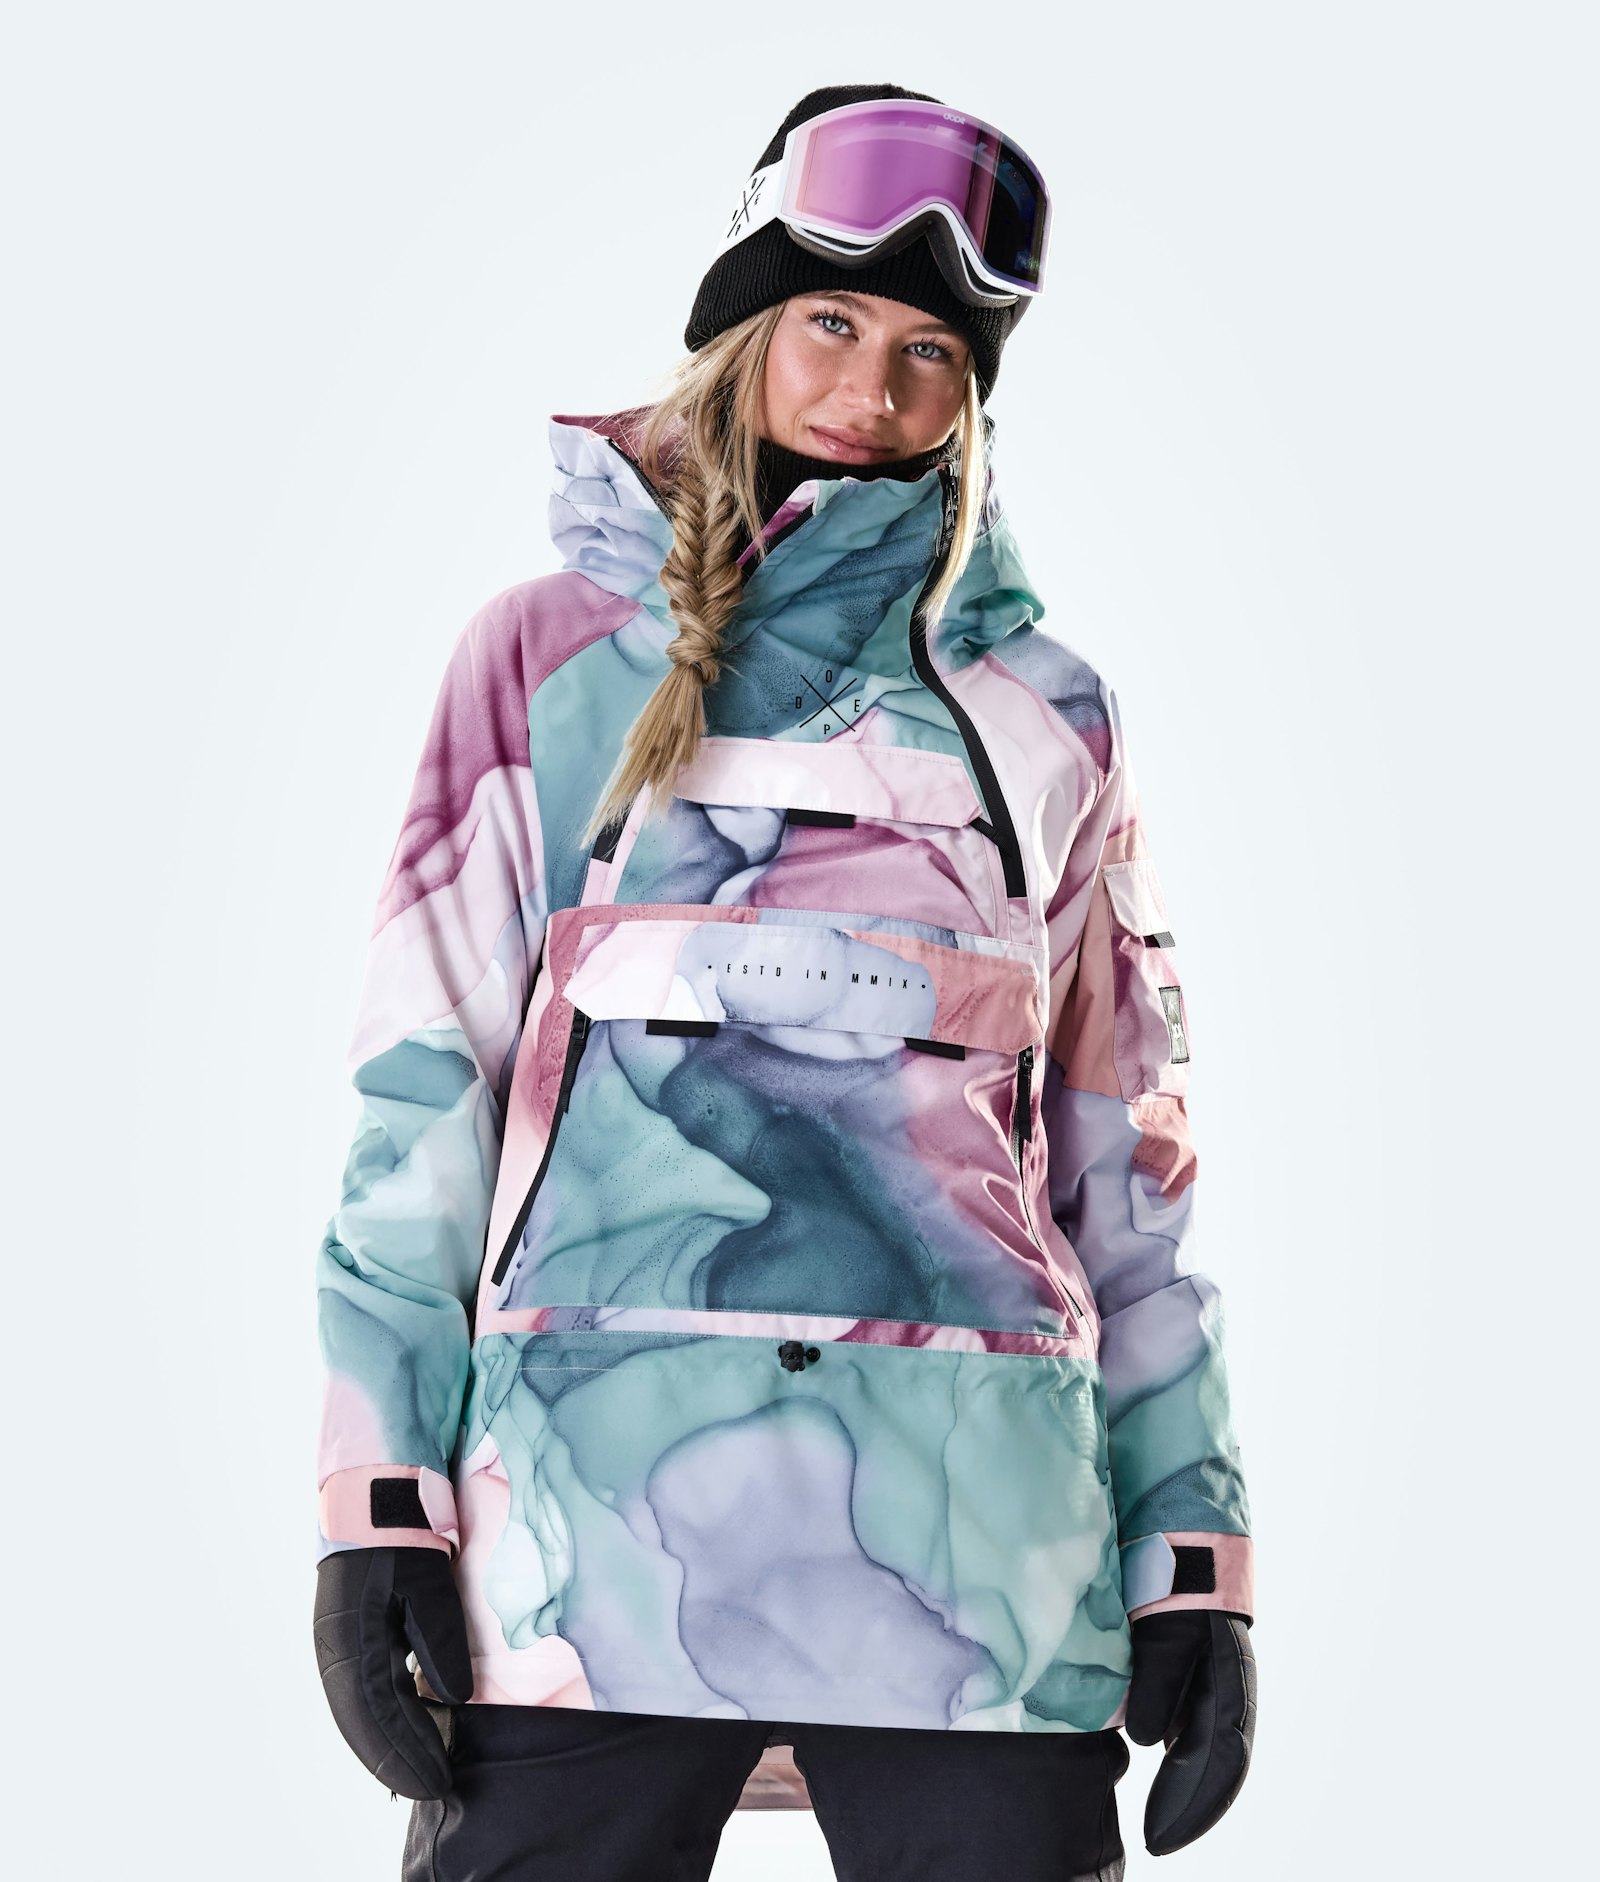 Akin W 2020 Chaqueta Esquí Mujer Mirage